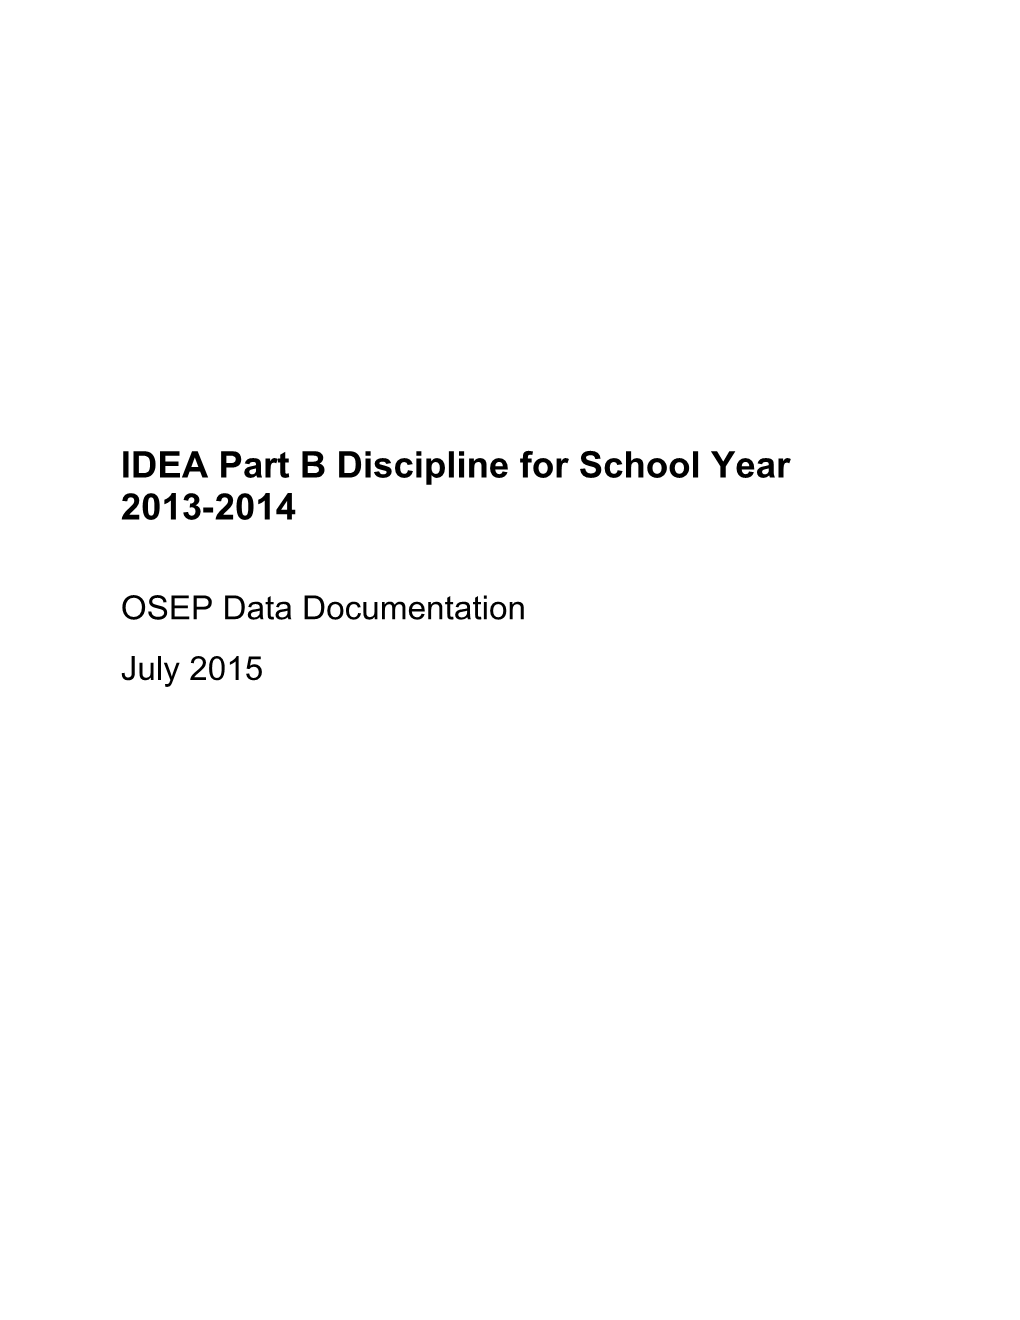 IDEA Part B Discipline for School Year 2013-2014